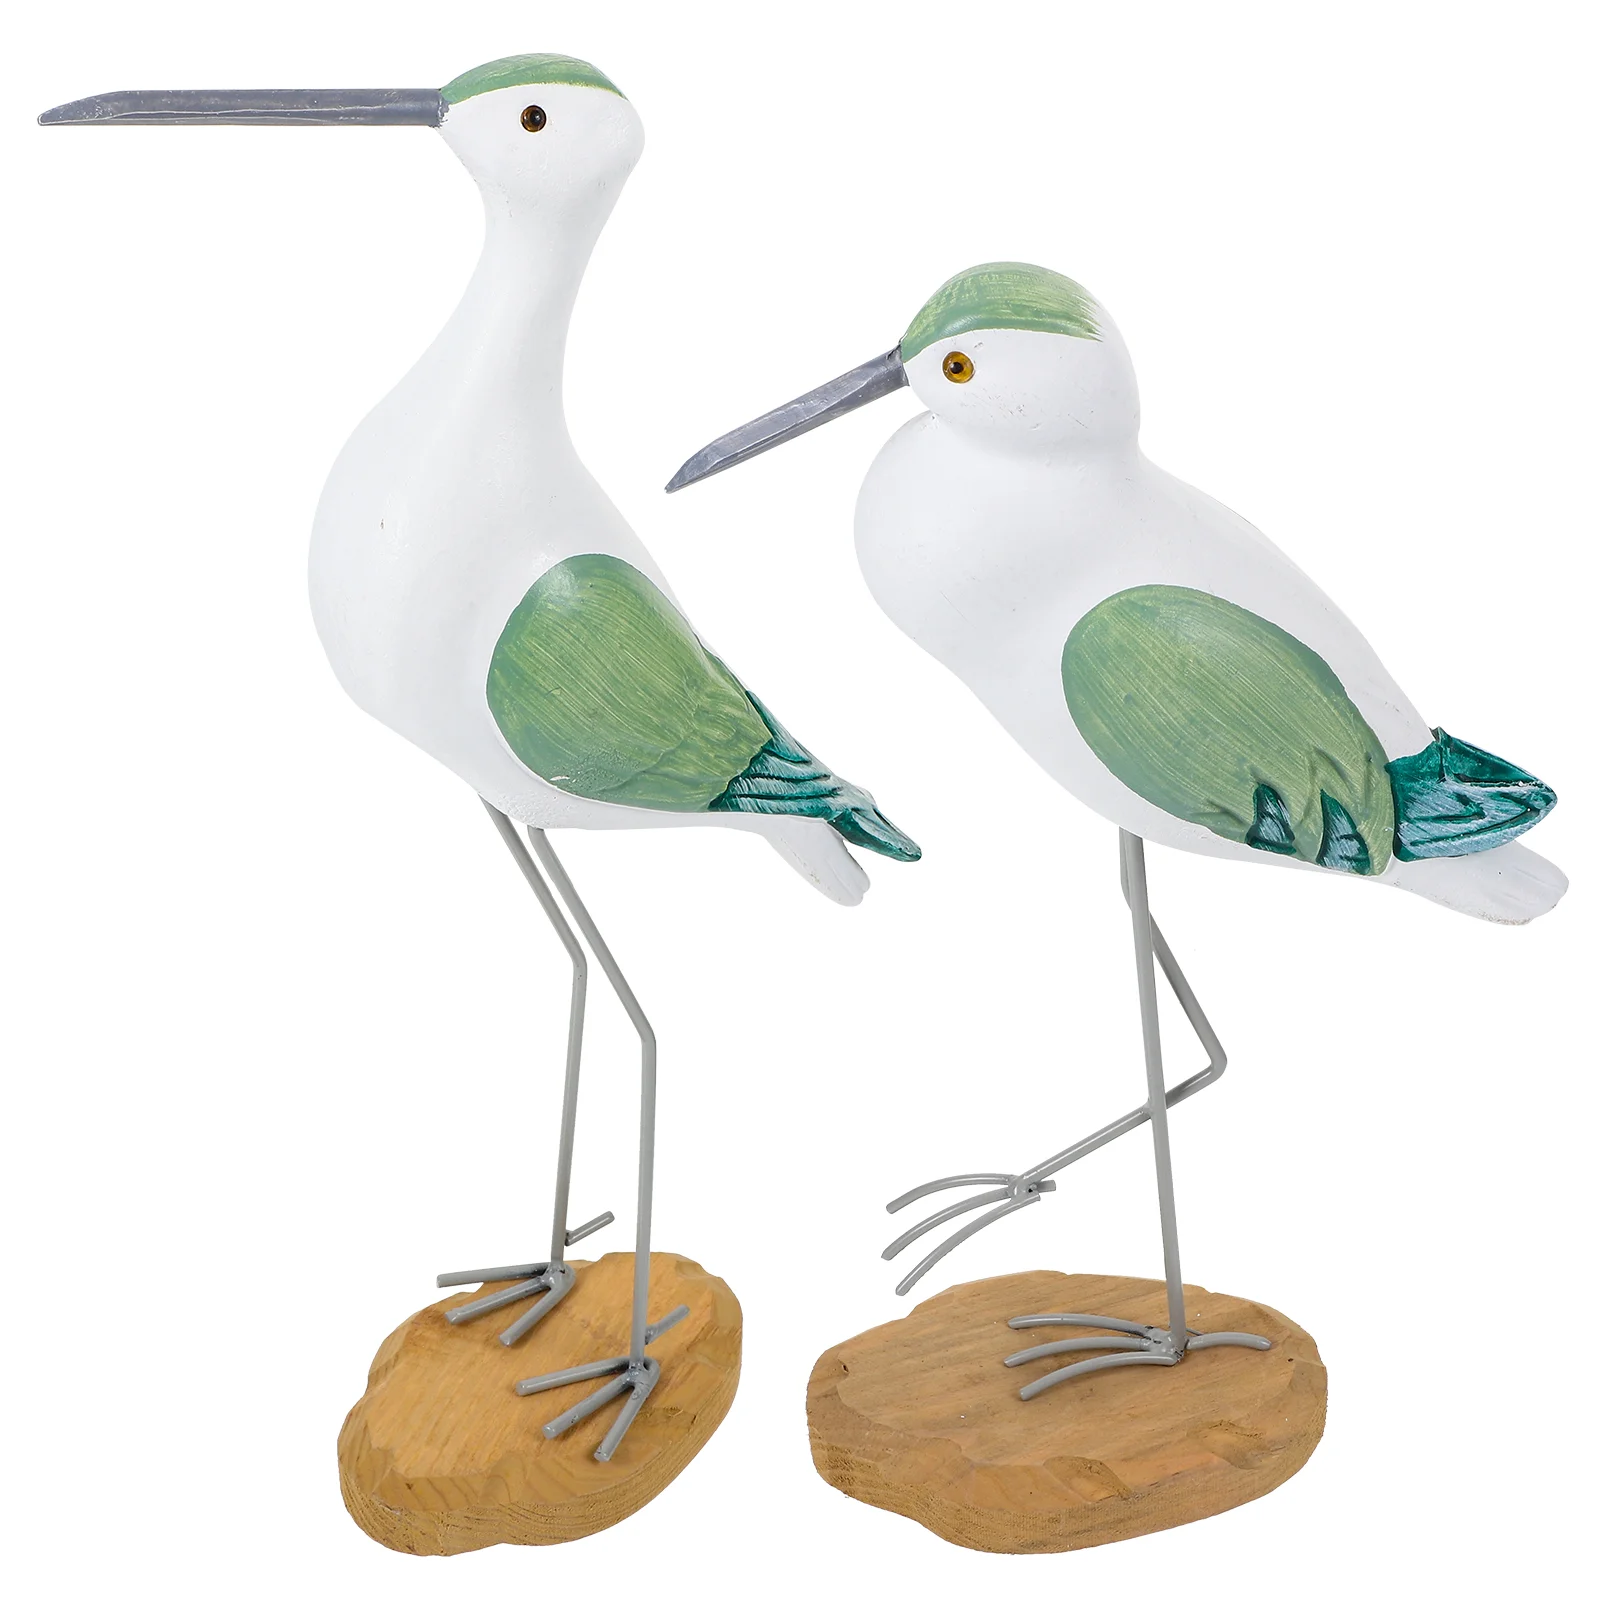 

Seagull Ornaments Wooden Craft Bird Adornment Decor Desktop Sculpture Statue Simulation